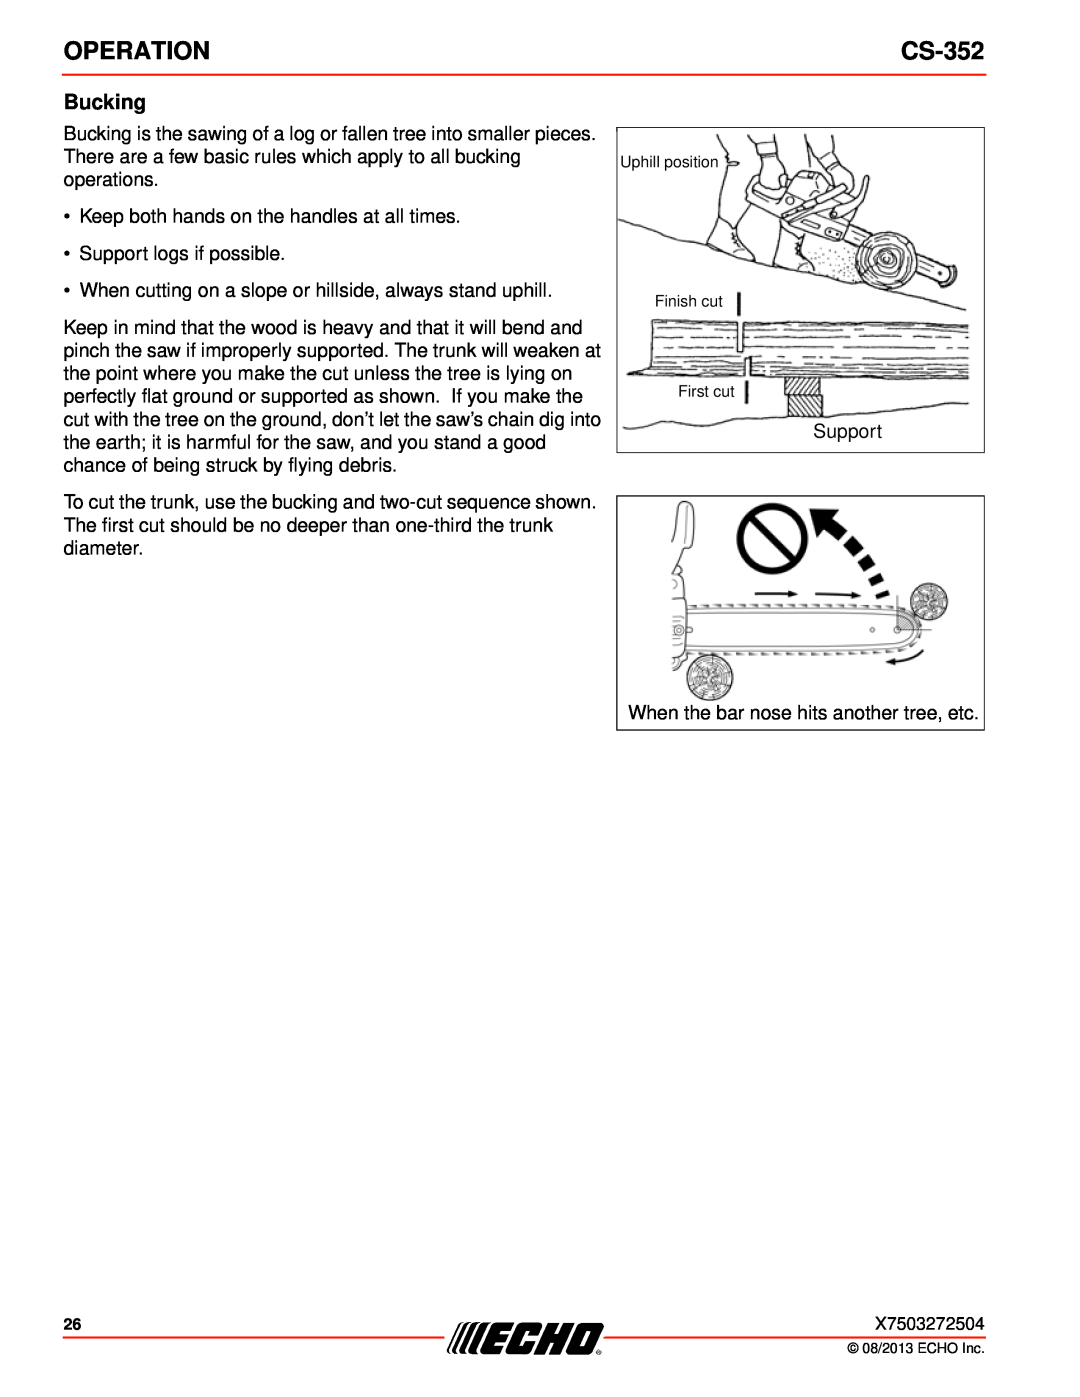 Echo CS-352 instruction manual Bucking, Operation 